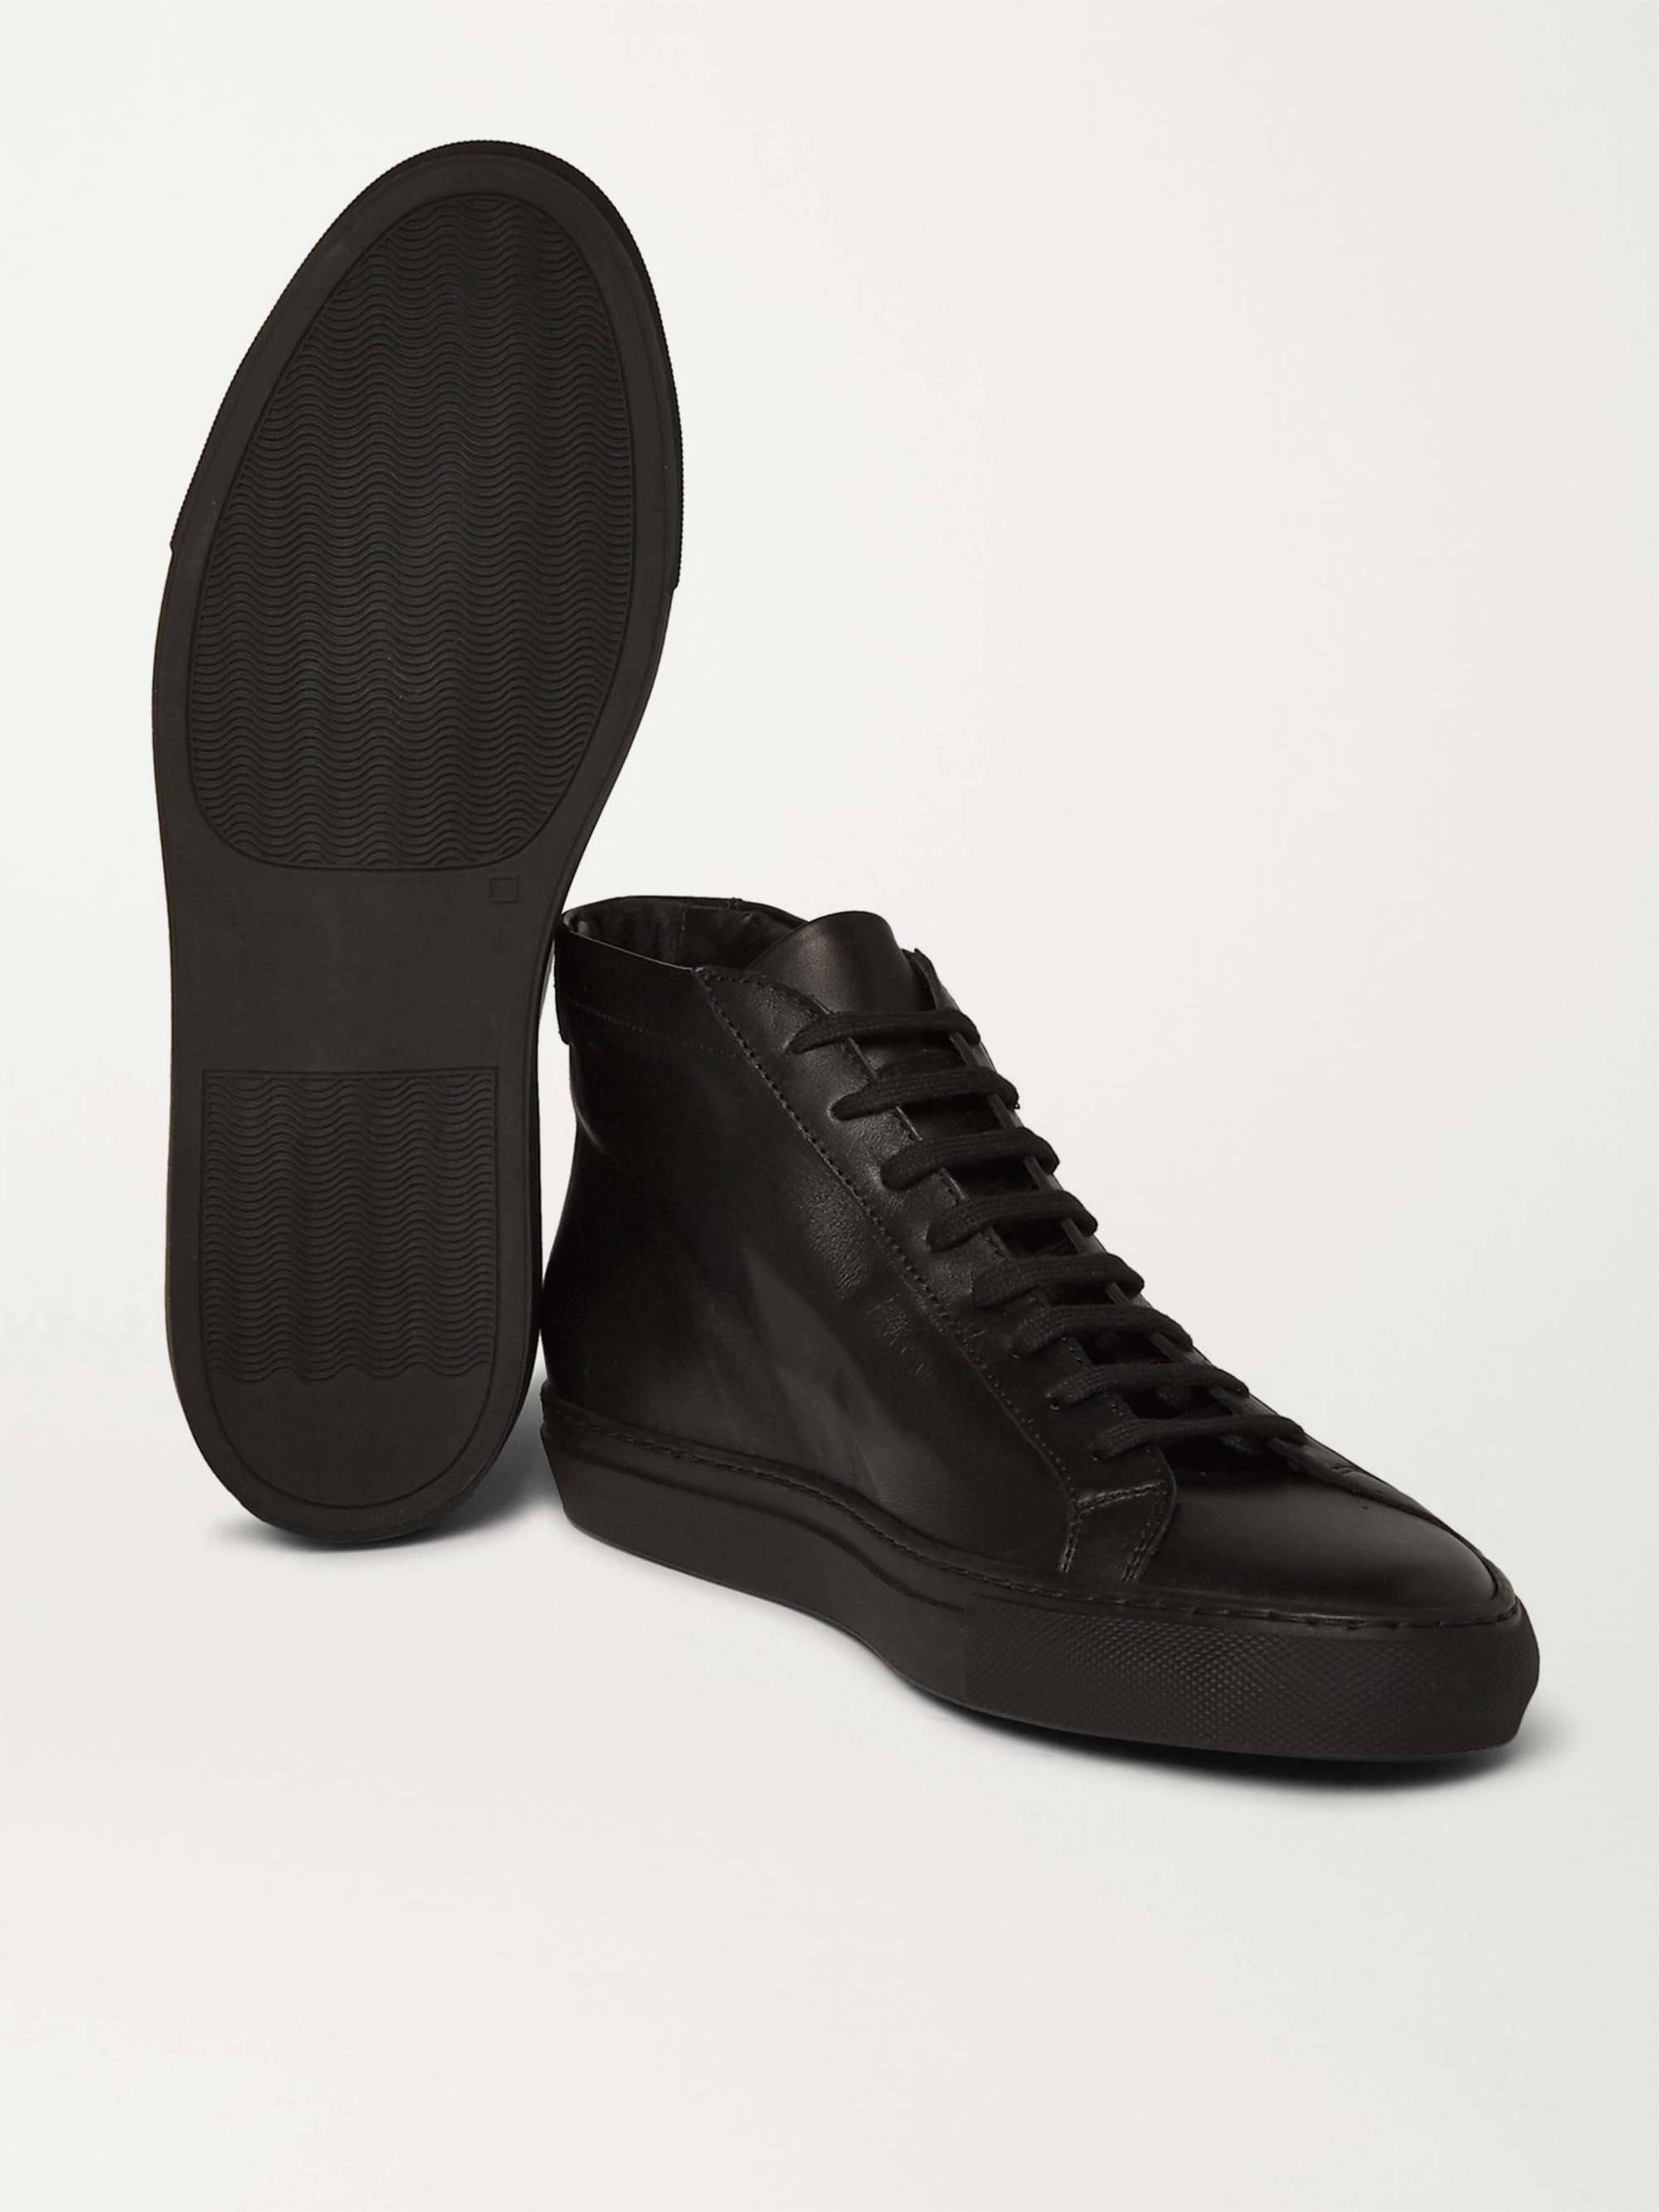 slap complicated lyrics Black Original Achilles Leather High-Top Sneakers | COMMON PROJECTS | MR  PORTER